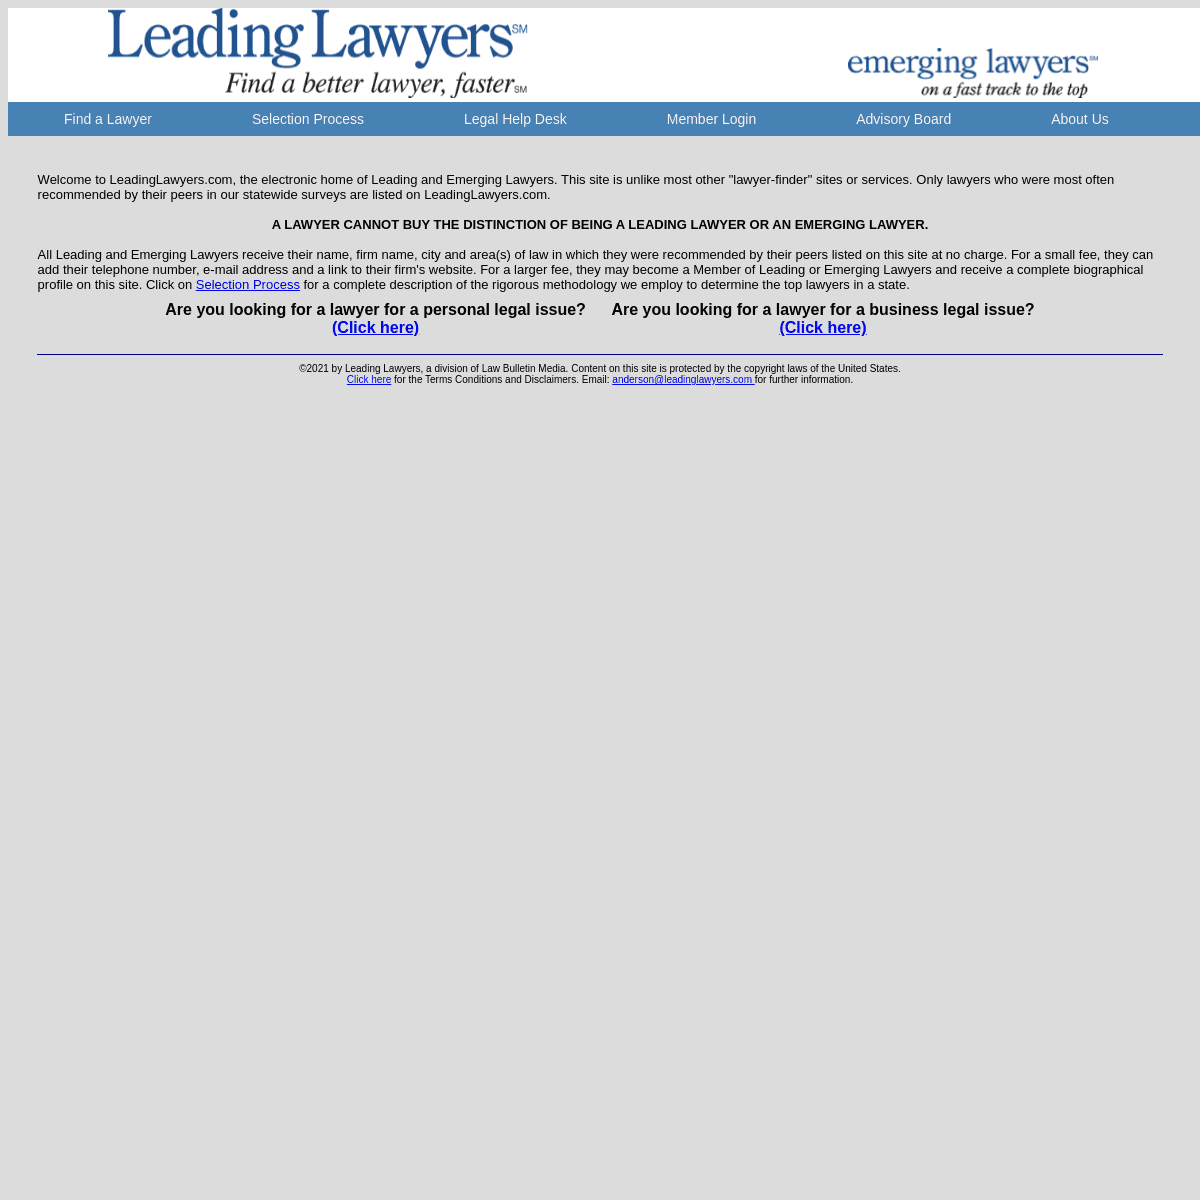 A complete backup of https://leadinglawyers.com